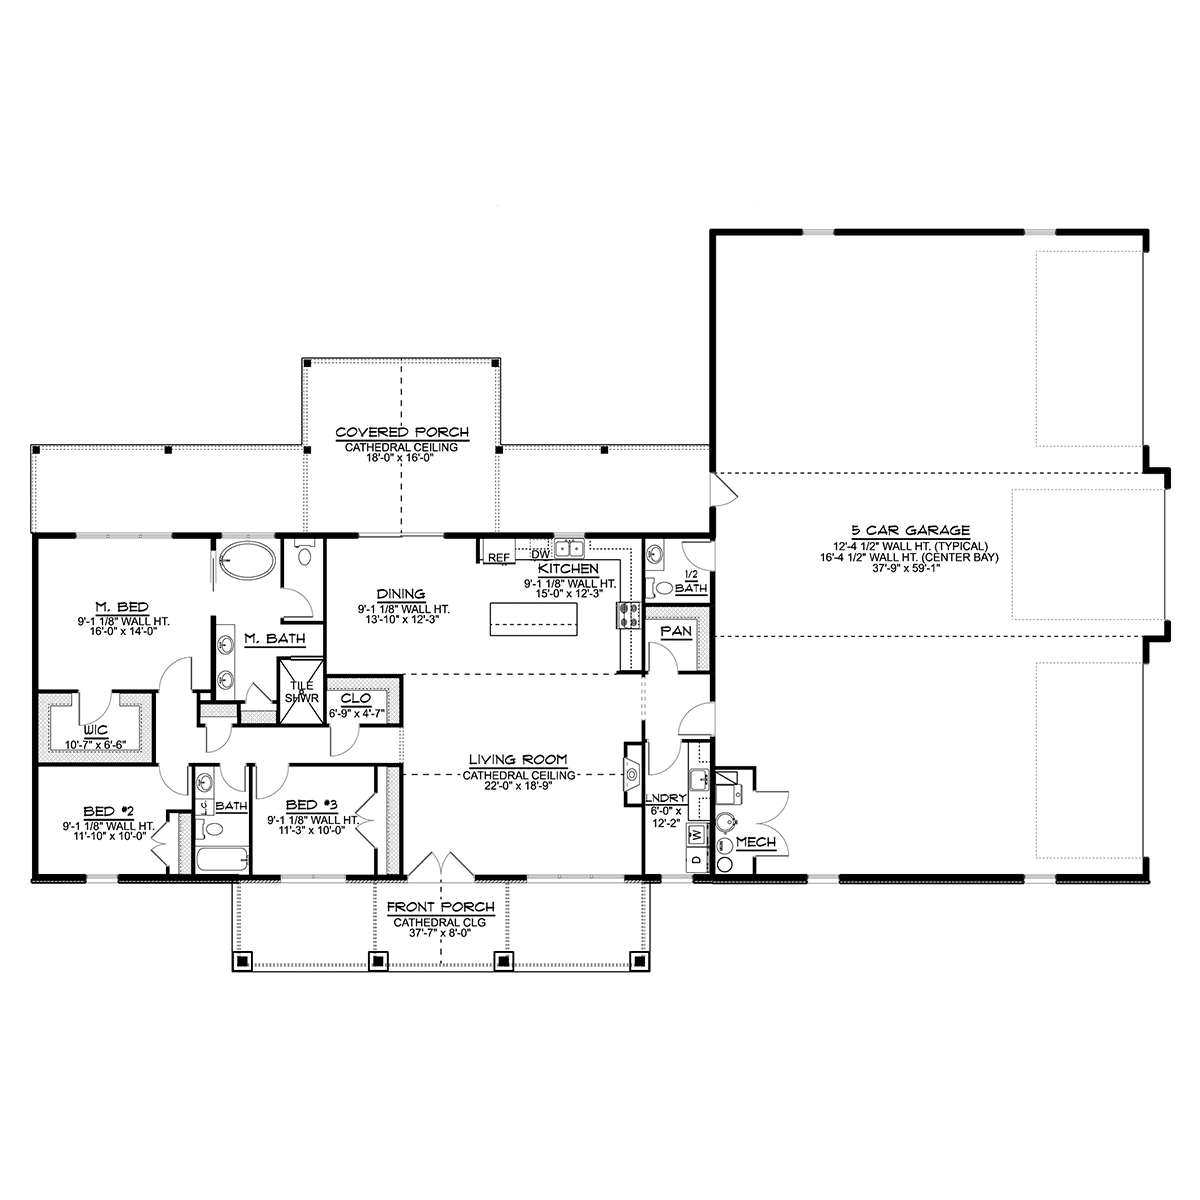 Barndominium Country Craftsman Ranch Level One of Plan 41819